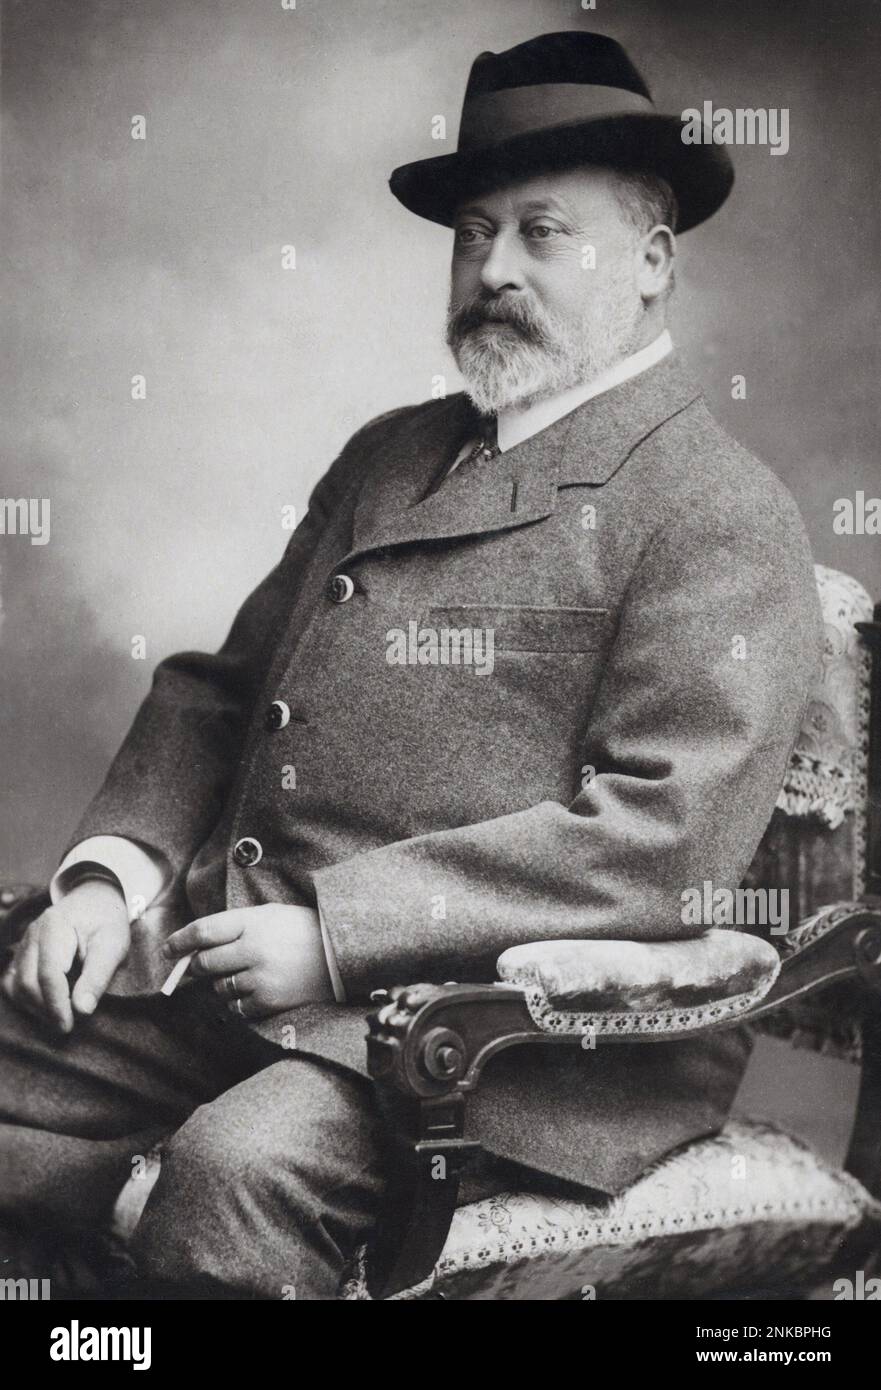 1908 c : The King of England EDWARD VII ( London 1841 - 1910 ) son of Queen Victoria ( 1819 - 1901 )  - REALI - ROYALTY - nobili - nobiltà - nobility   - hat - cappello - loden - cigarette - sigaretta - smoker - fumatore  - white beard - barba bianca - tissue - RE EDOARDO  - BELLE EPOQUE ----  Archivio GBB Stock Photo